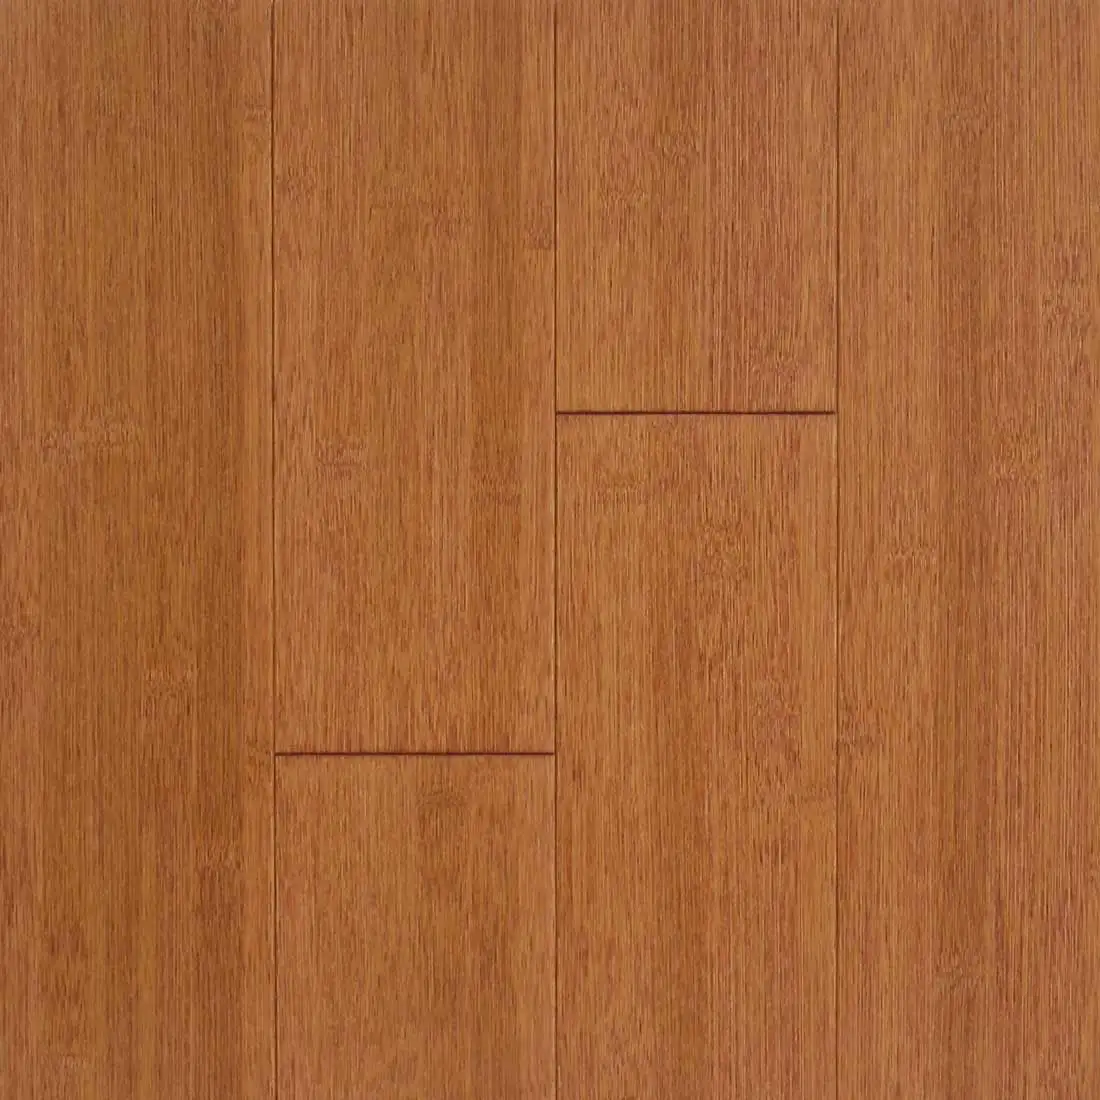 stained bamboo flooring.jpg